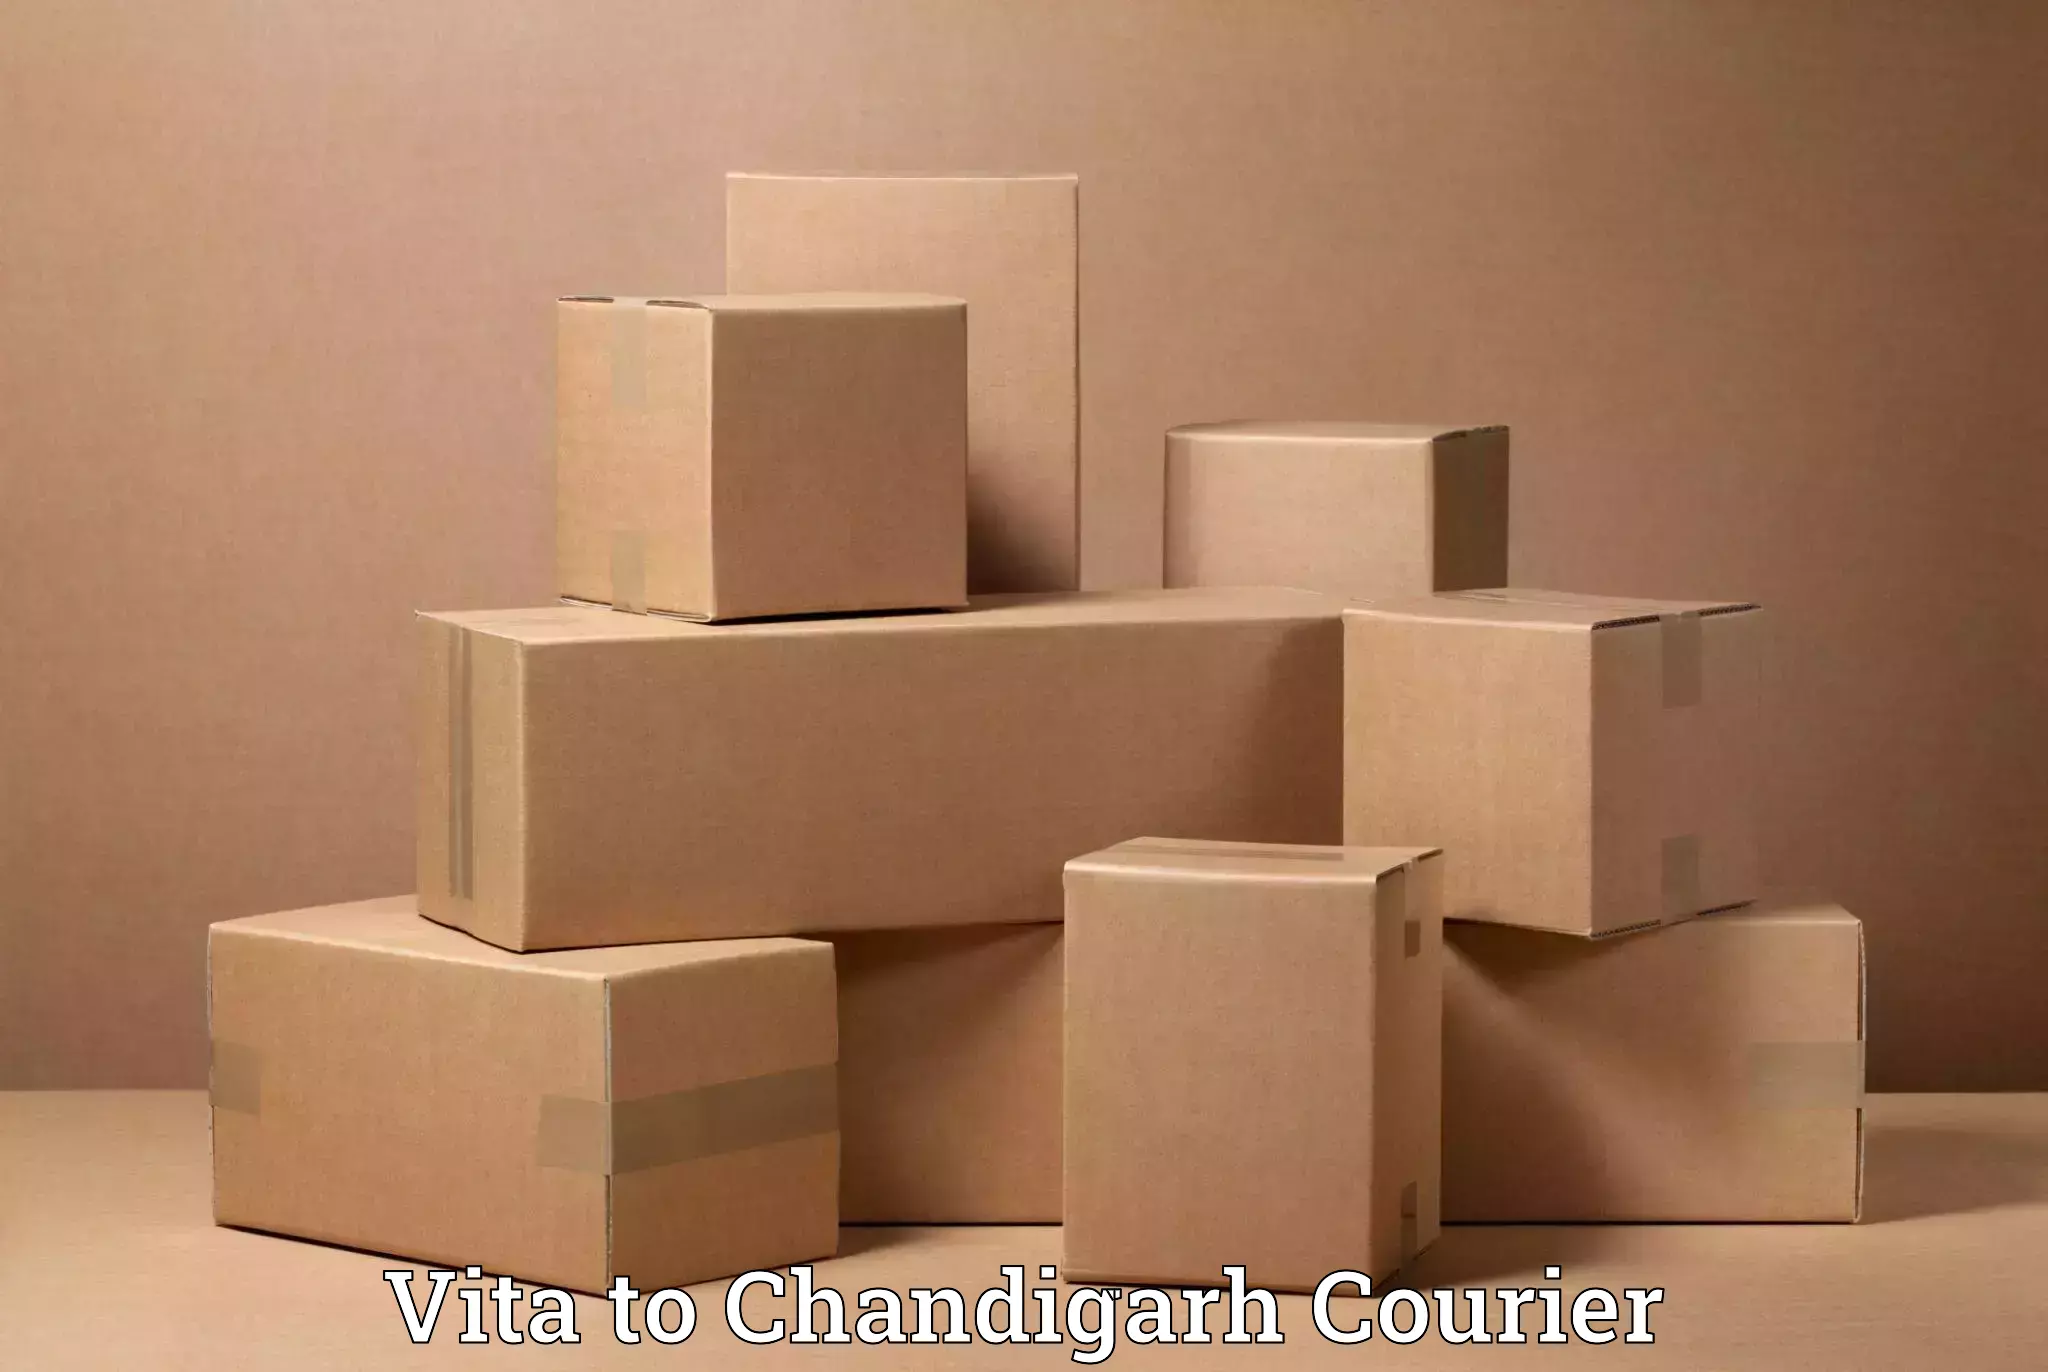 Trusted moving company Vita to Chandigarh